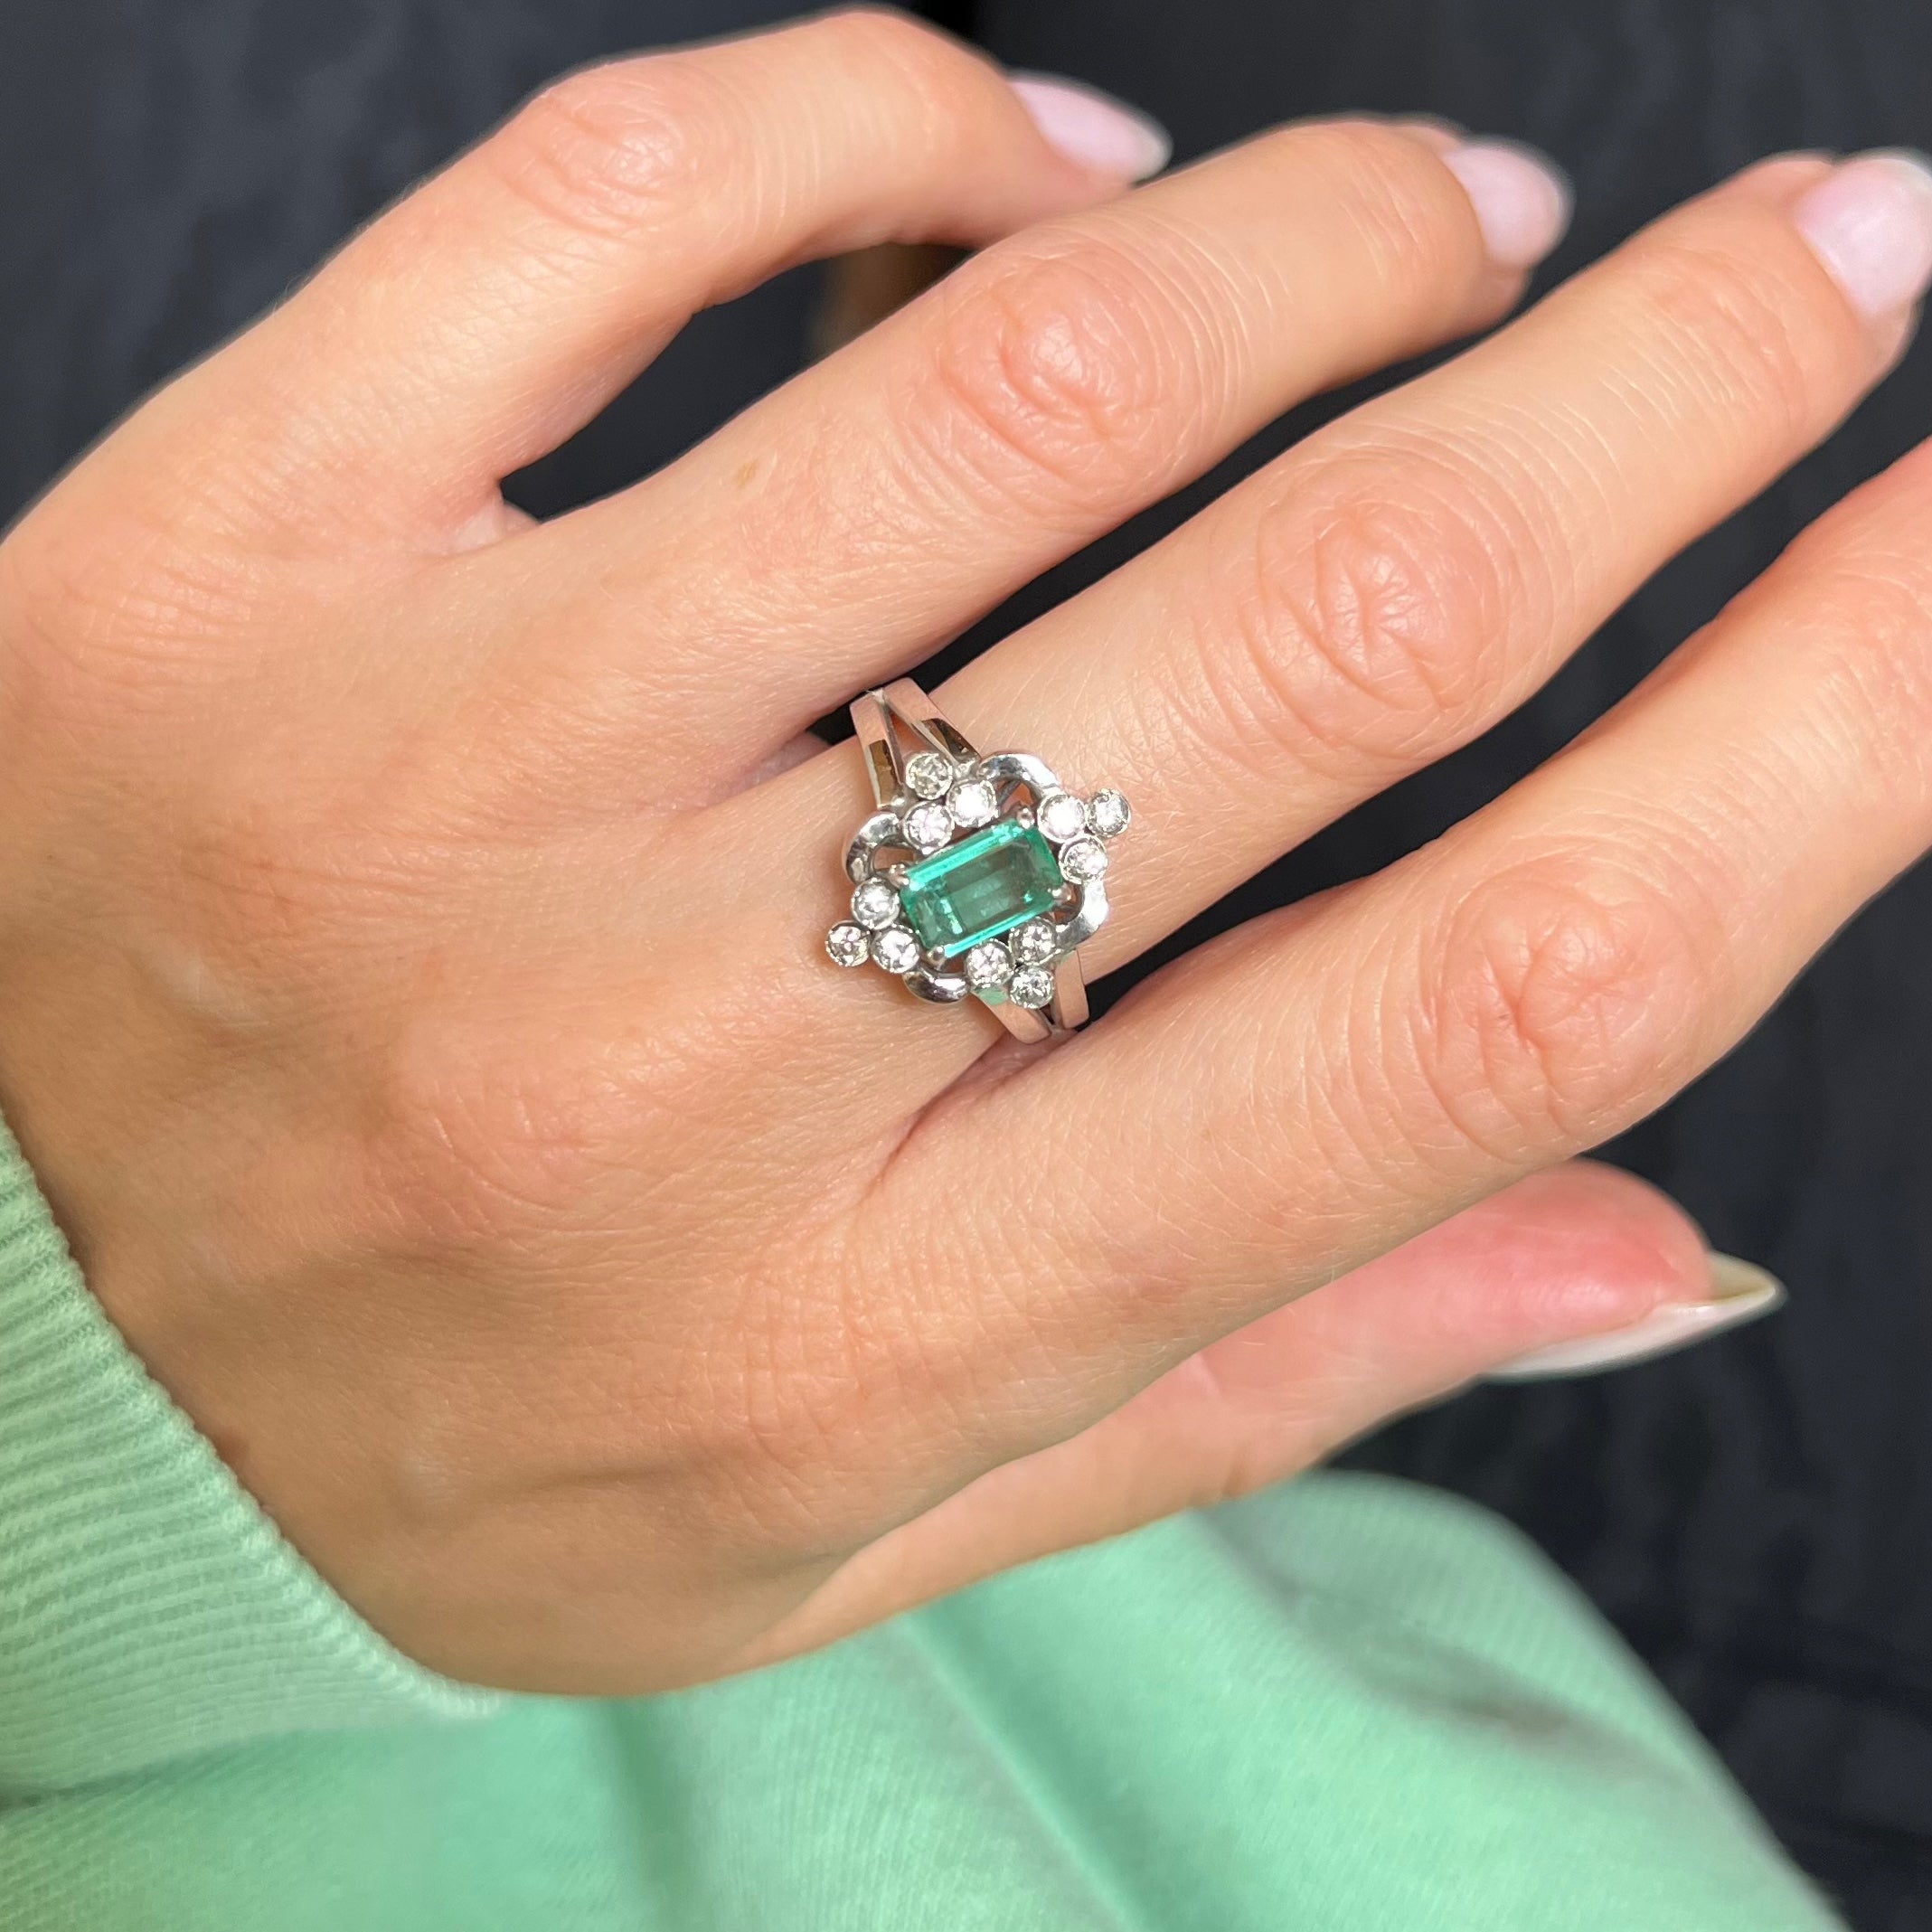 Vintage Emerald and Diamond Ornate Ring